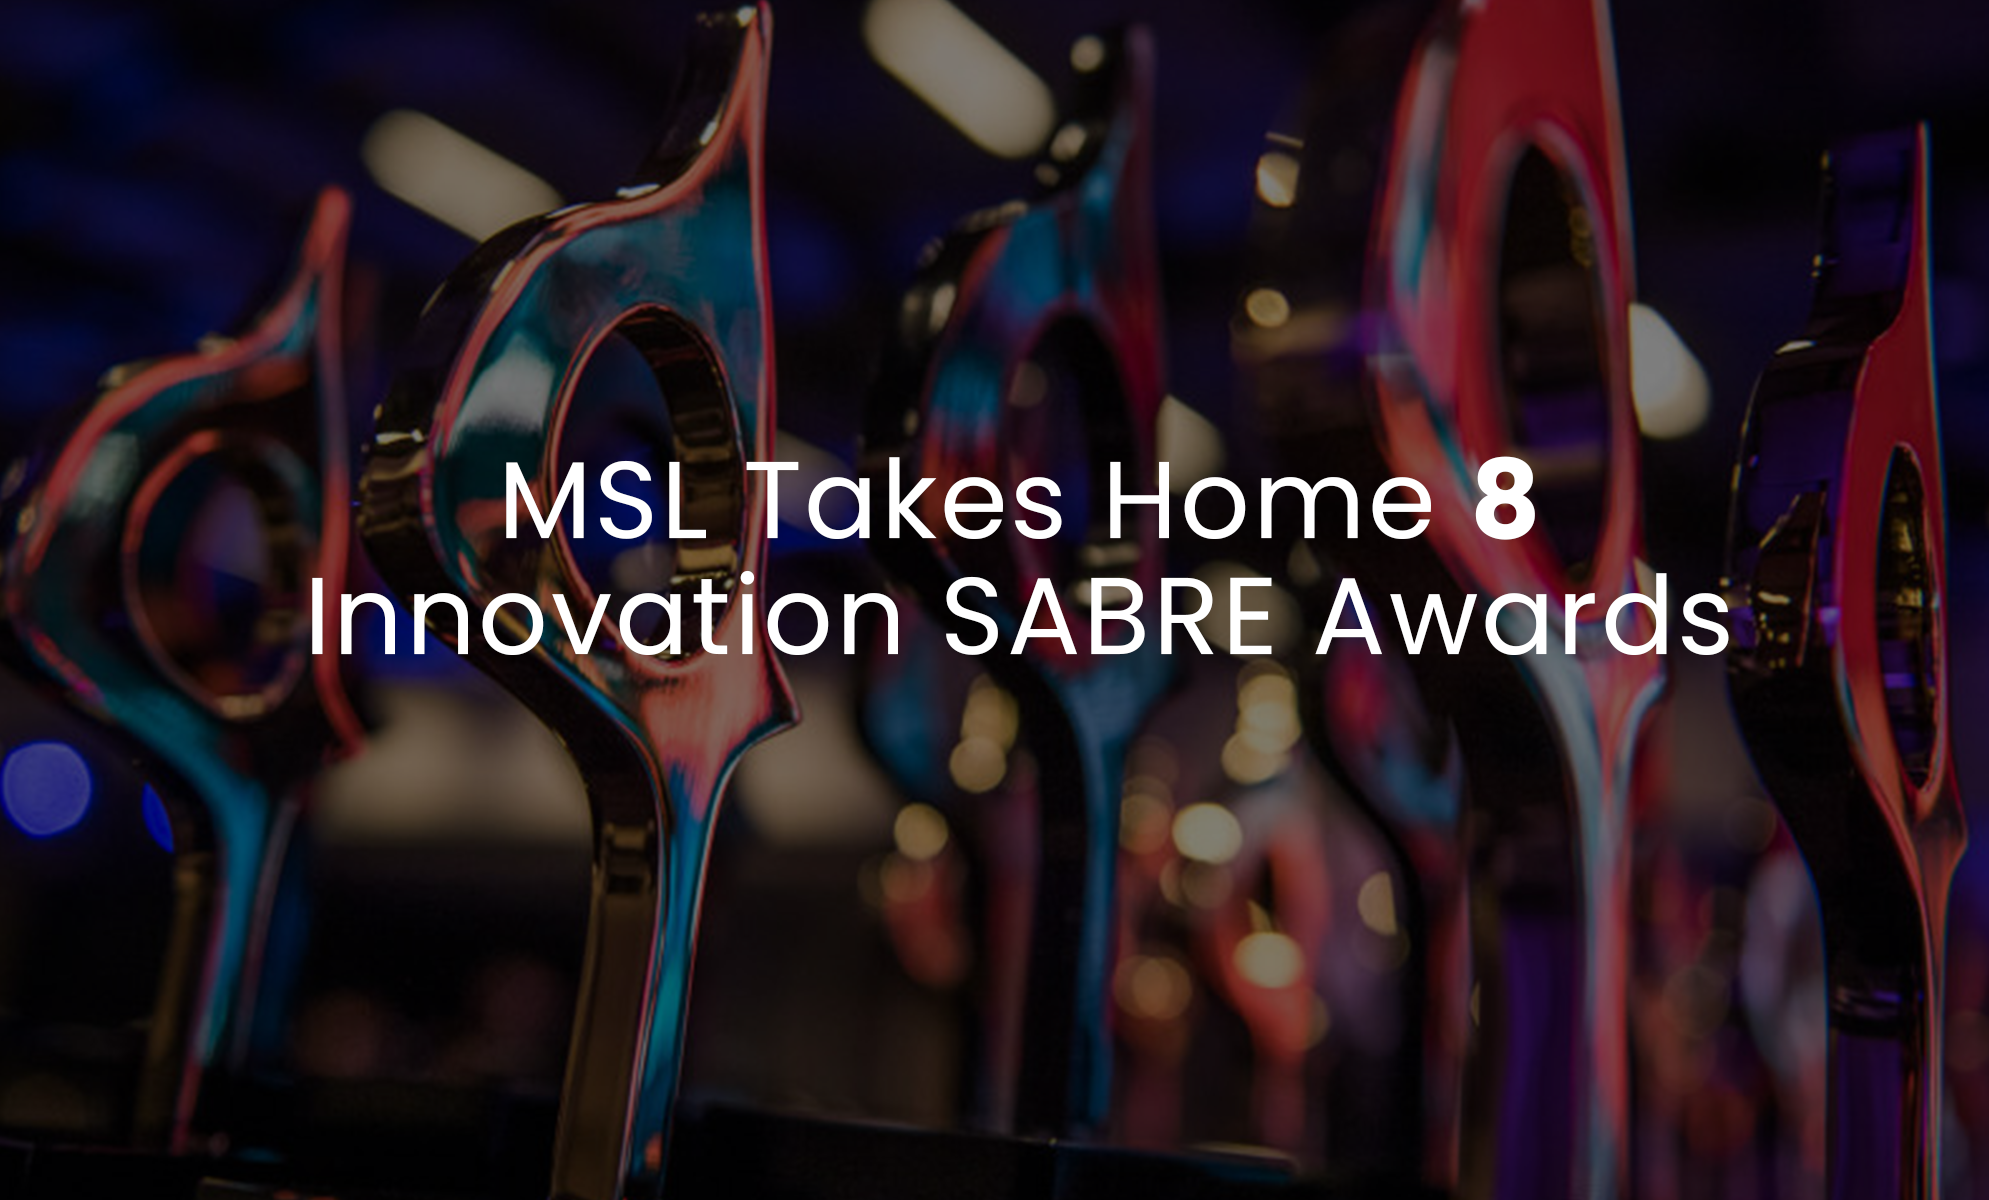 MSL takes home 8 Innovation SABRE Awards